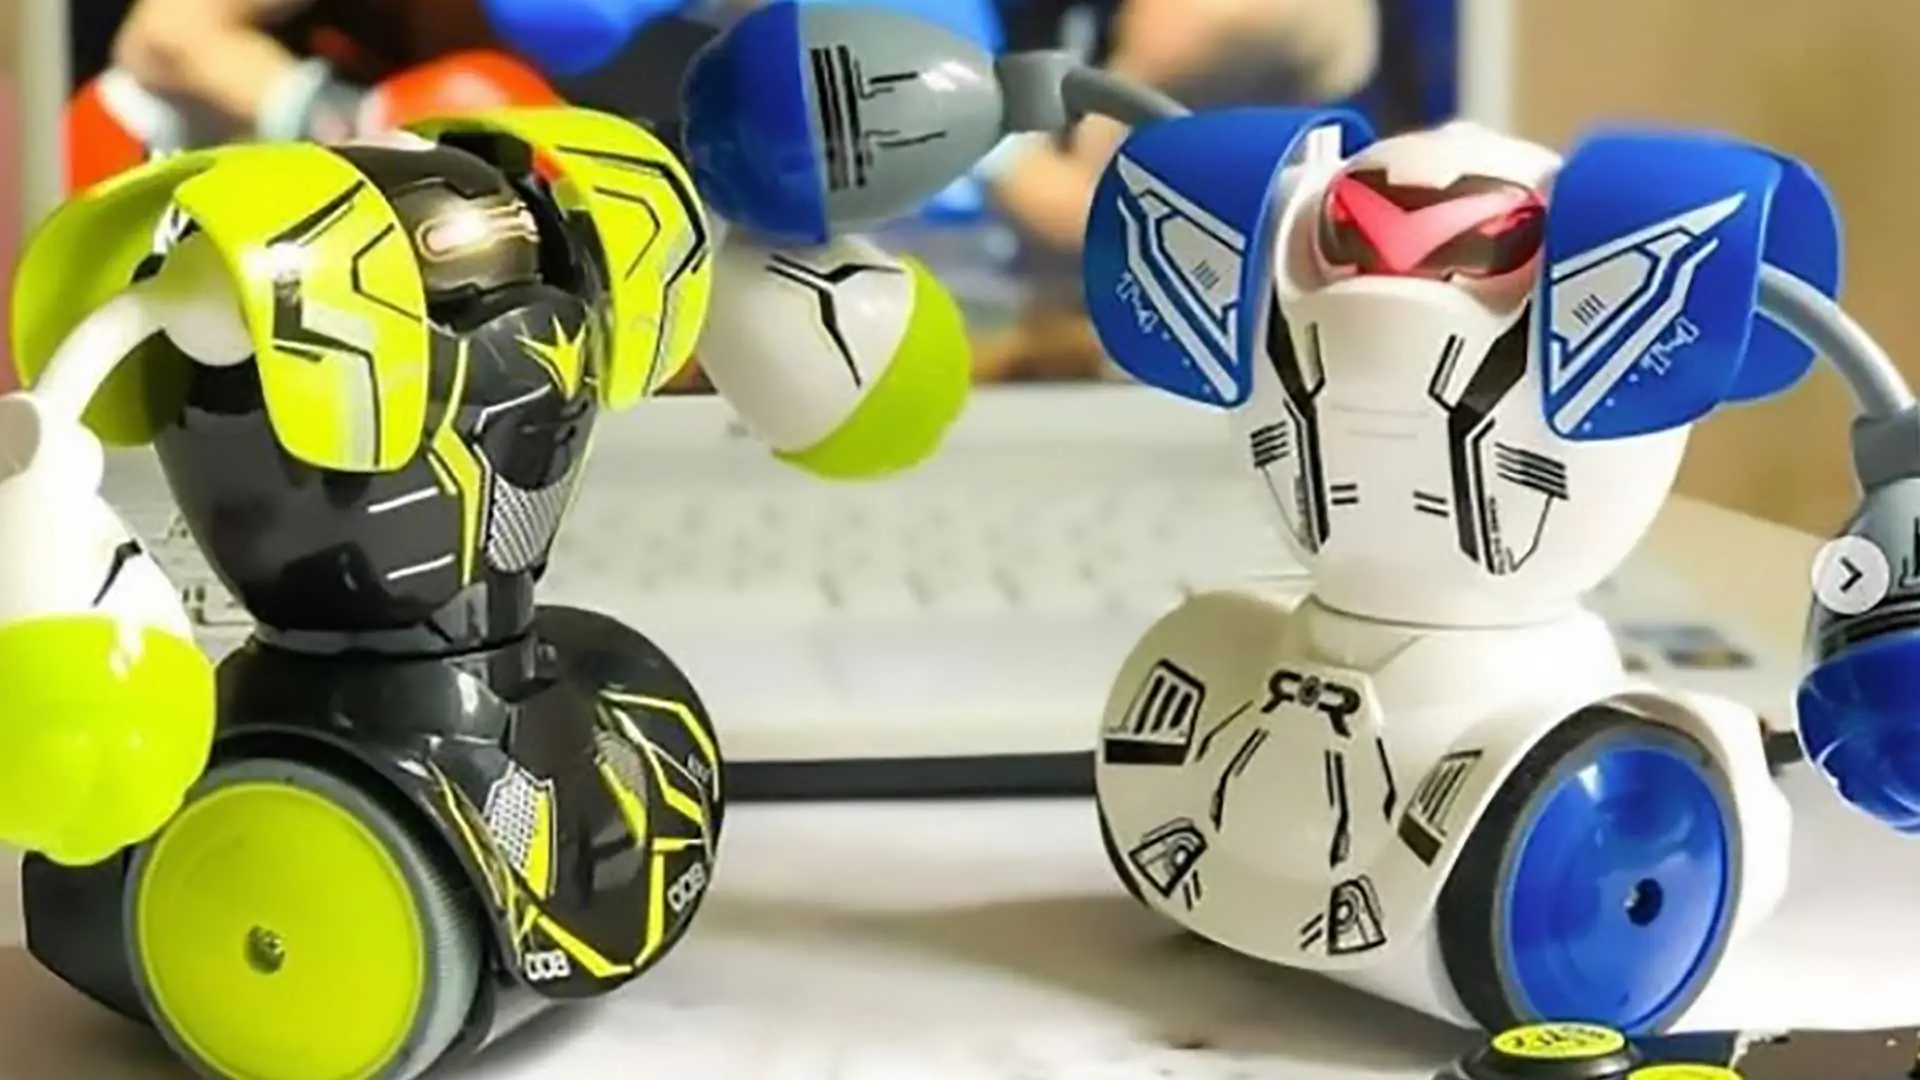 Jual RC Battling Robot Robo Kombat Silverlit Battle with AI